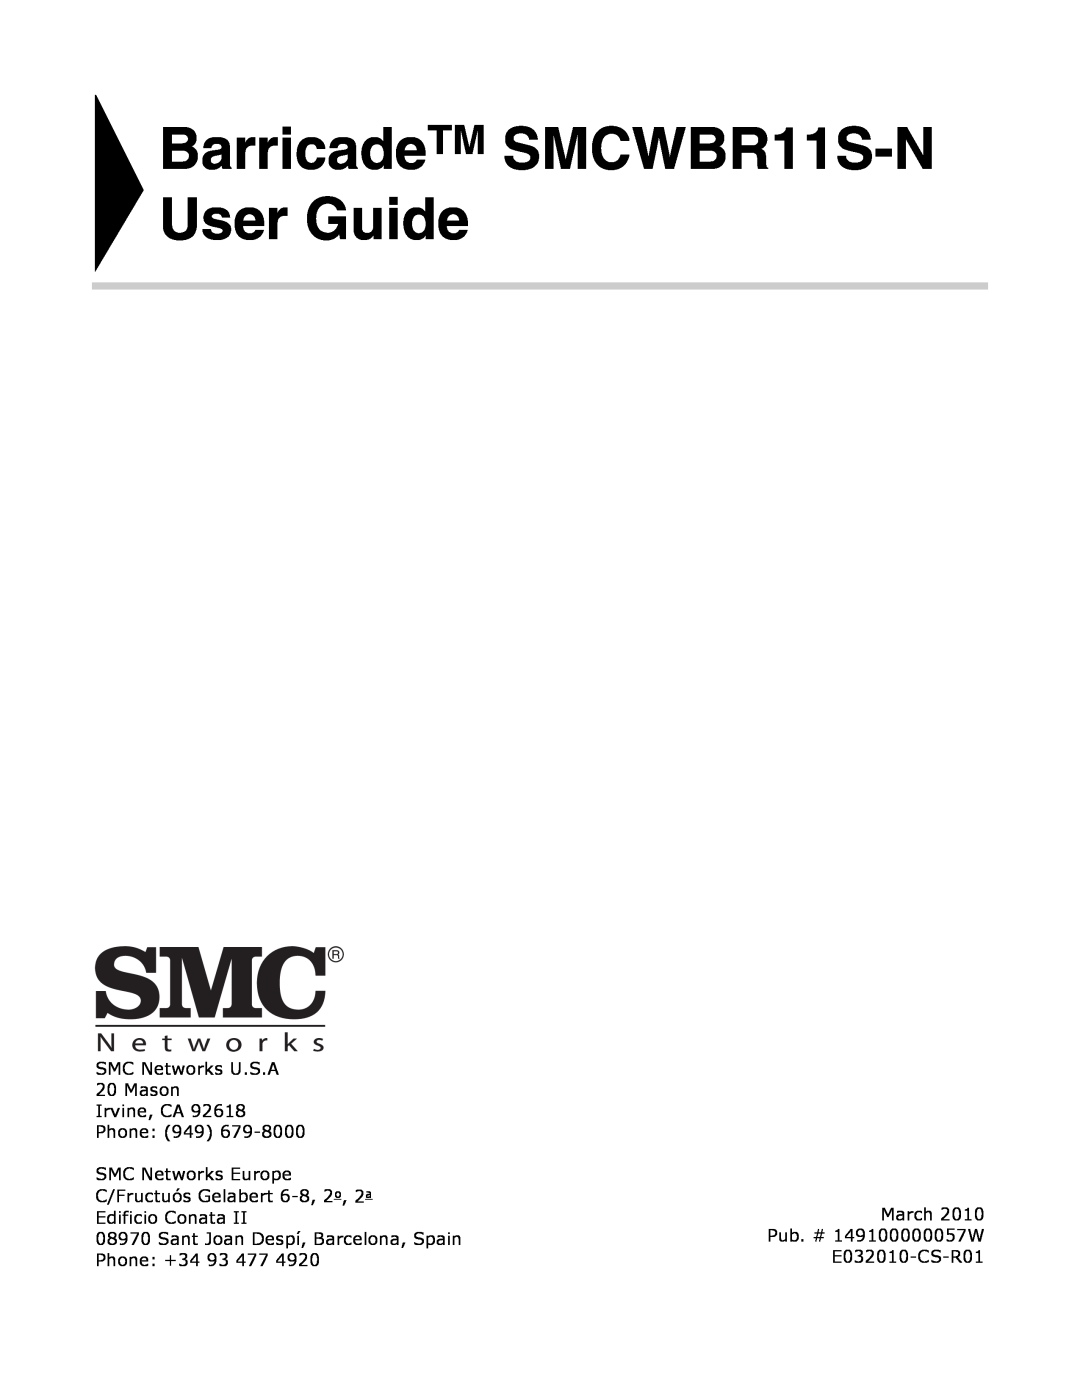 SMC Networks BarricadeTM SMCWBR11S-N User Guide, SMC Networks U.S.A 20 Mason Irvine, CA Phone 949, SMC Networks Europe 